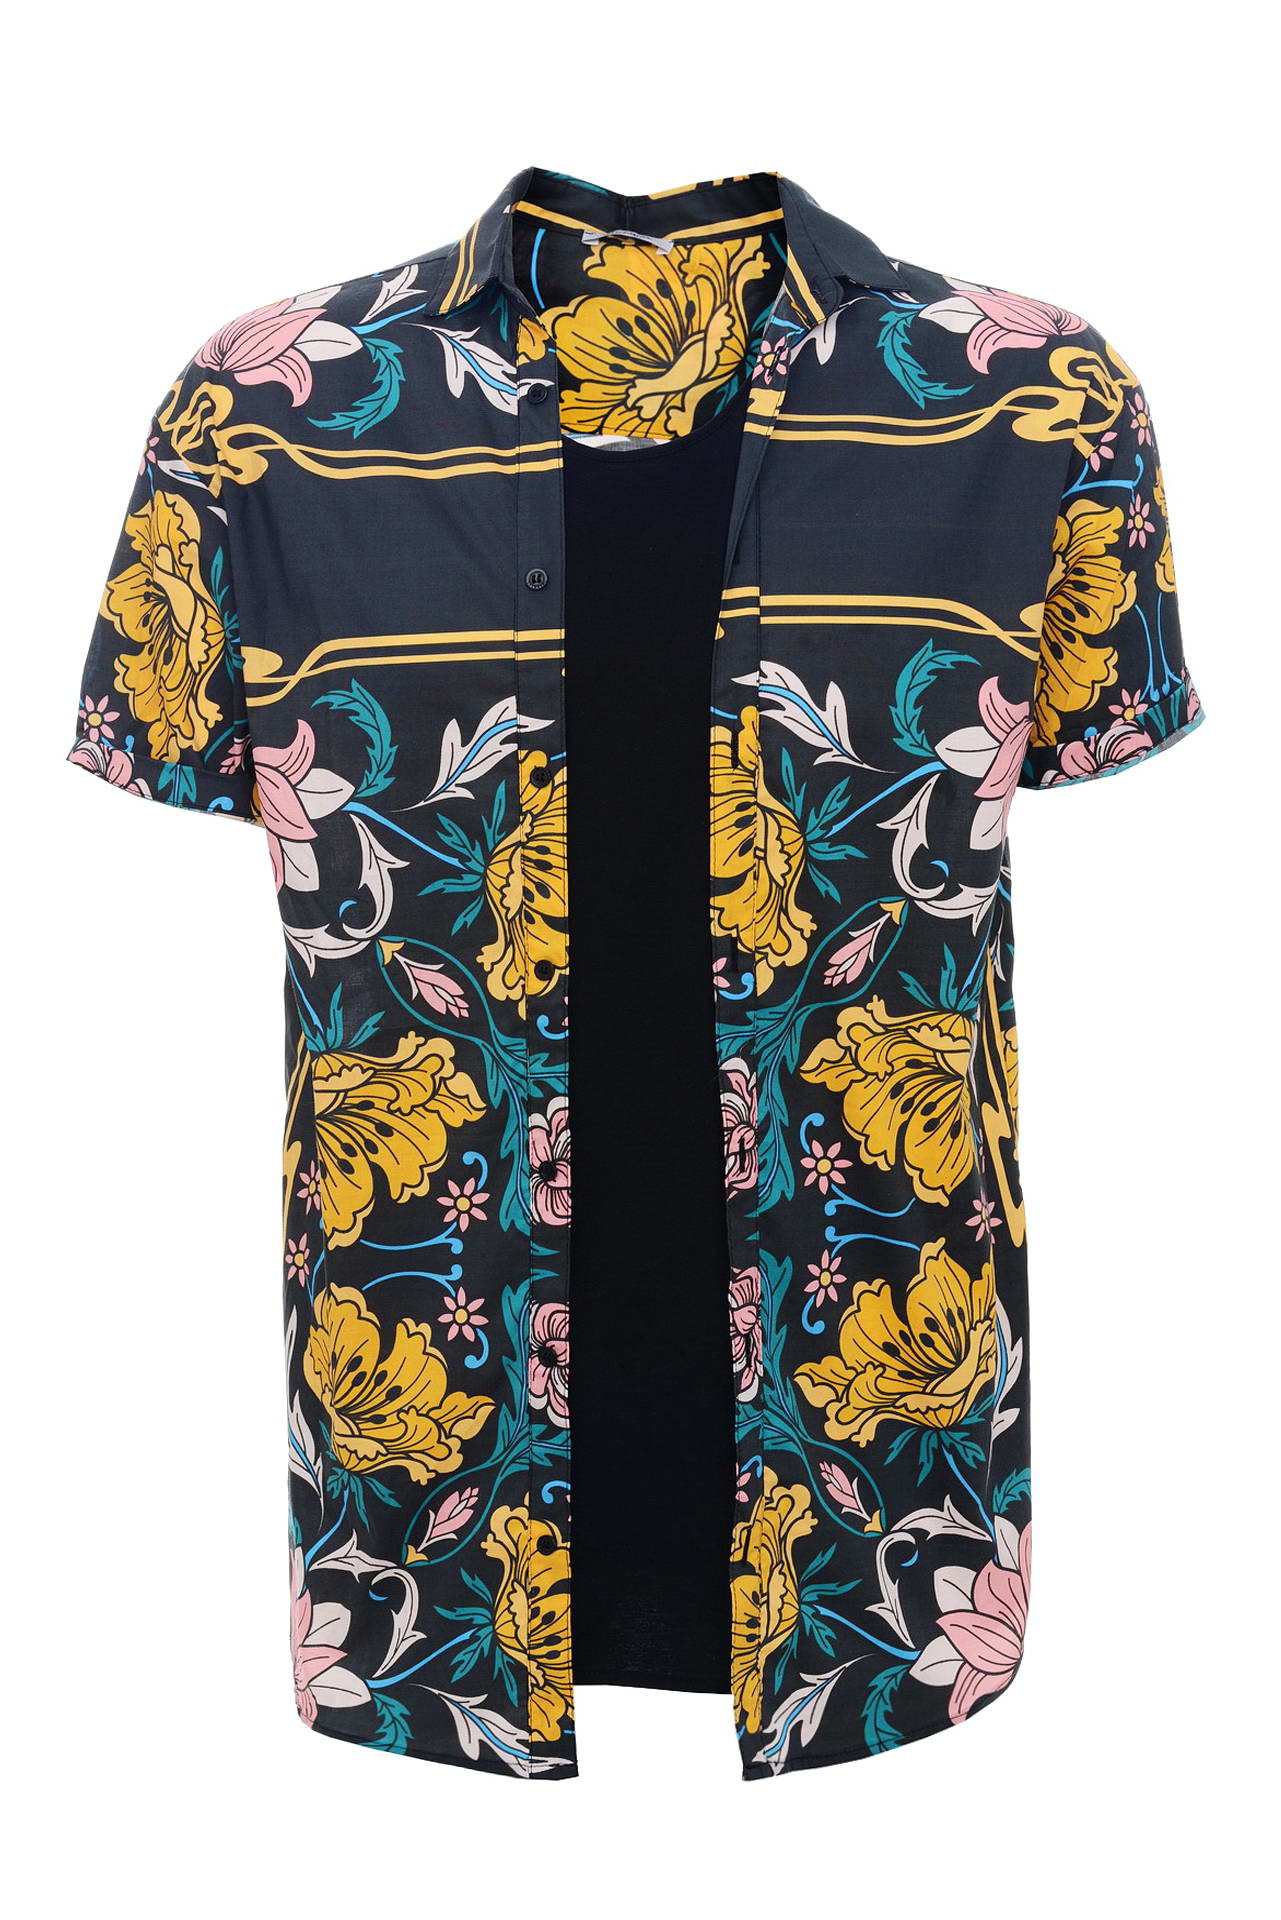 Одежда мужская Рубашка IMPERIAL (CZA8P4I/15.2). Купить за 5390 руб.